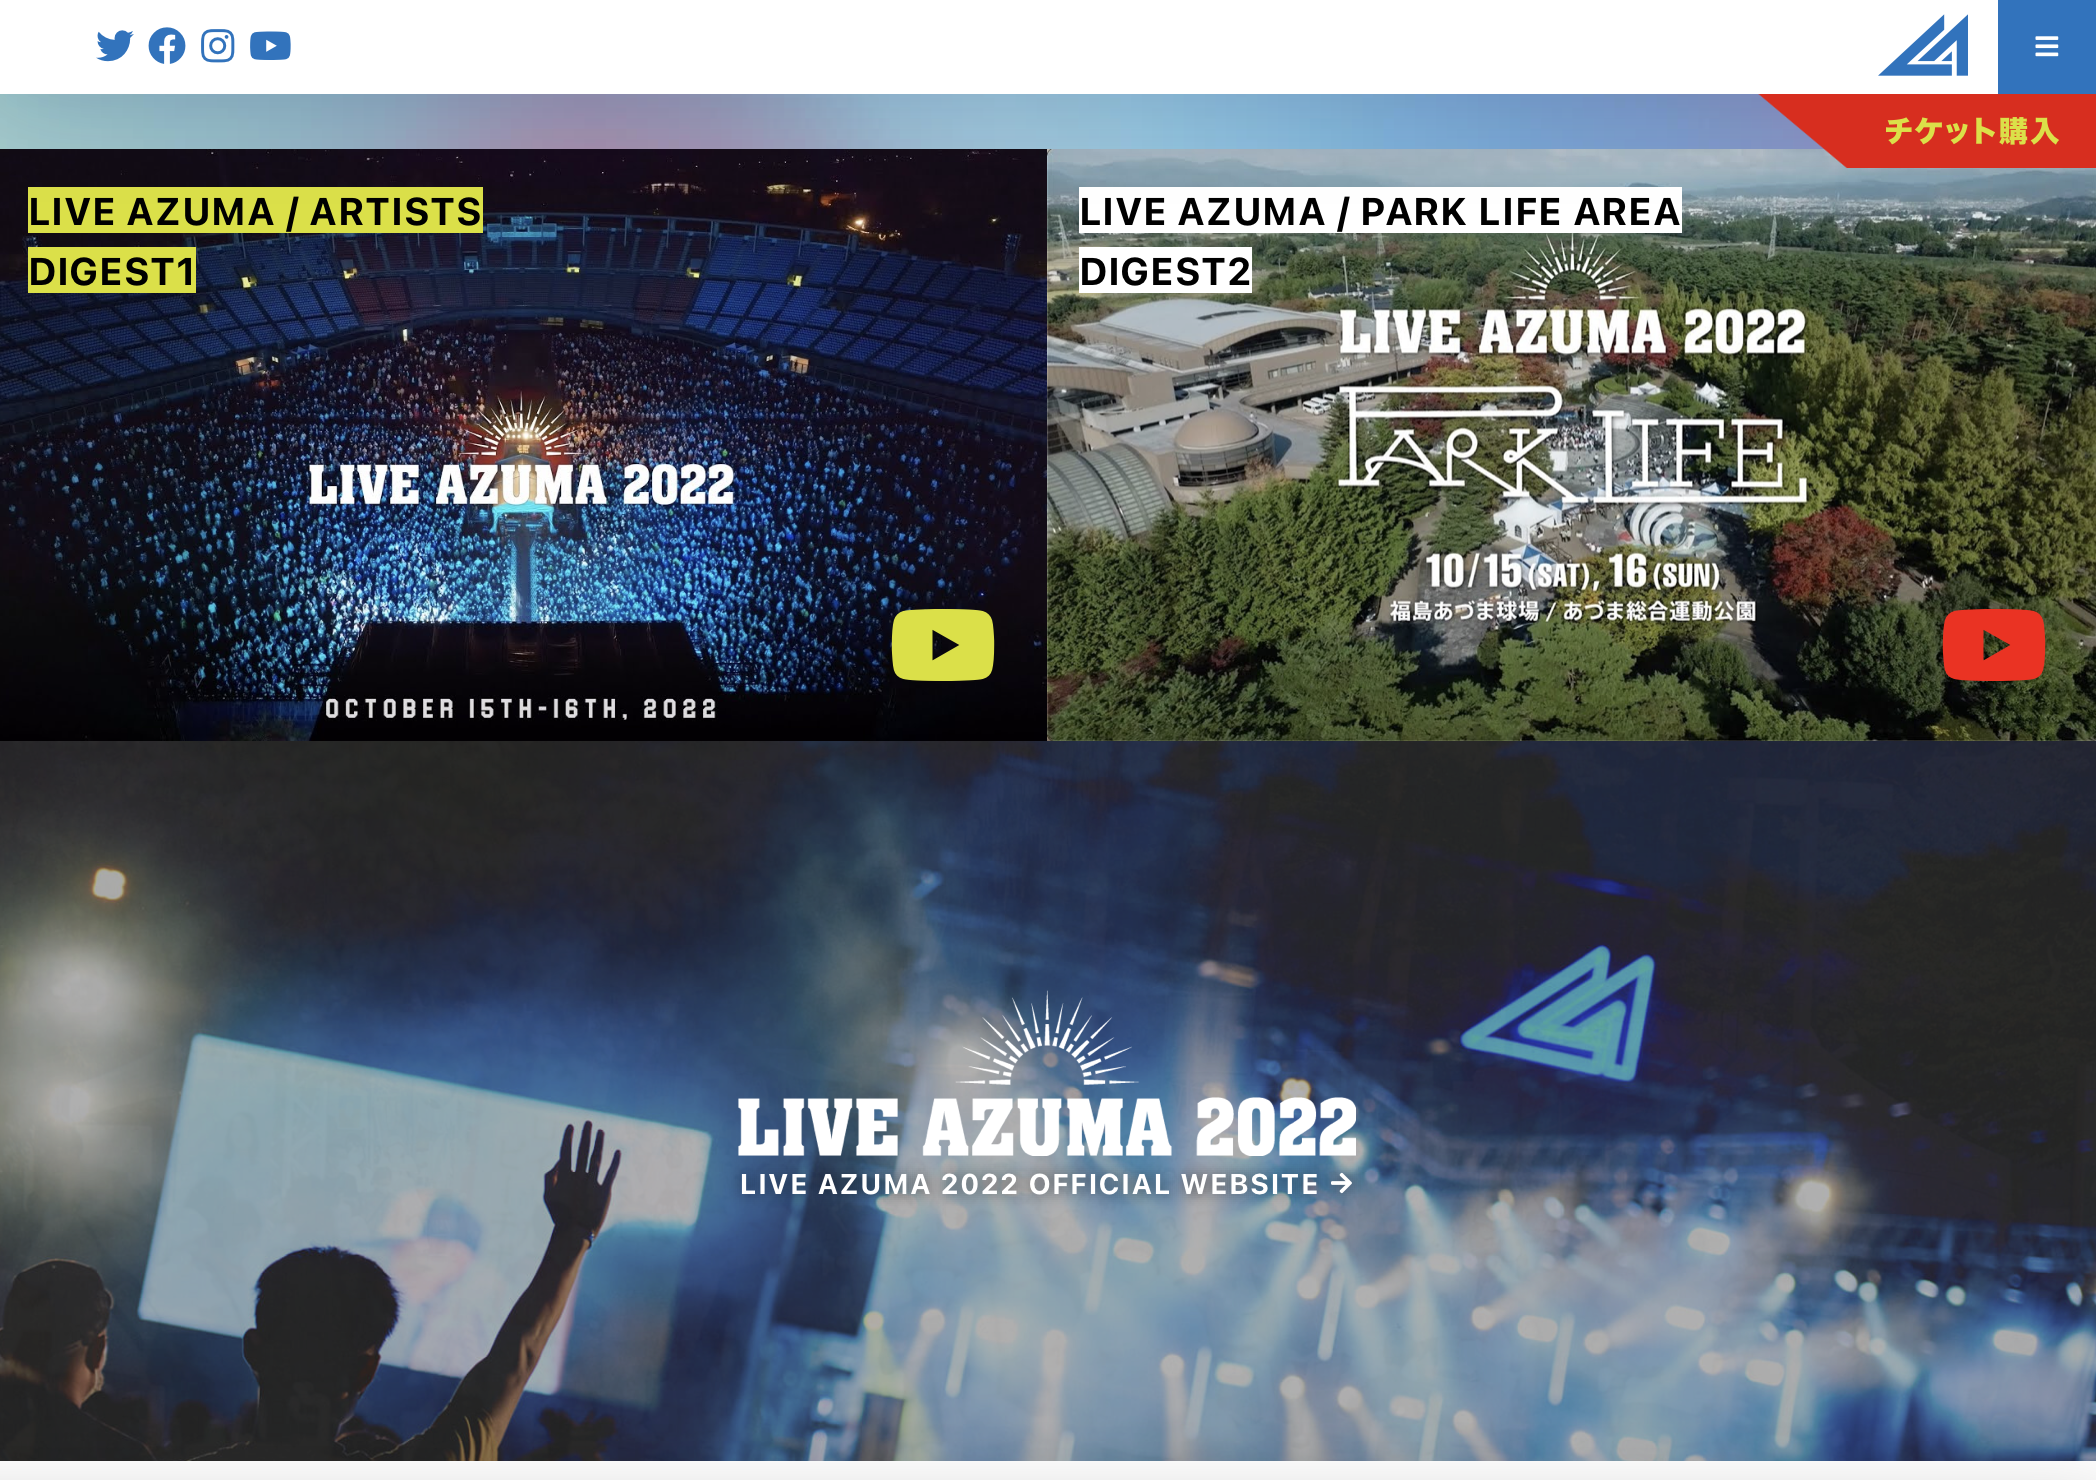 LIVE AZUMA 2023 / PRODUCE、WEB、etc